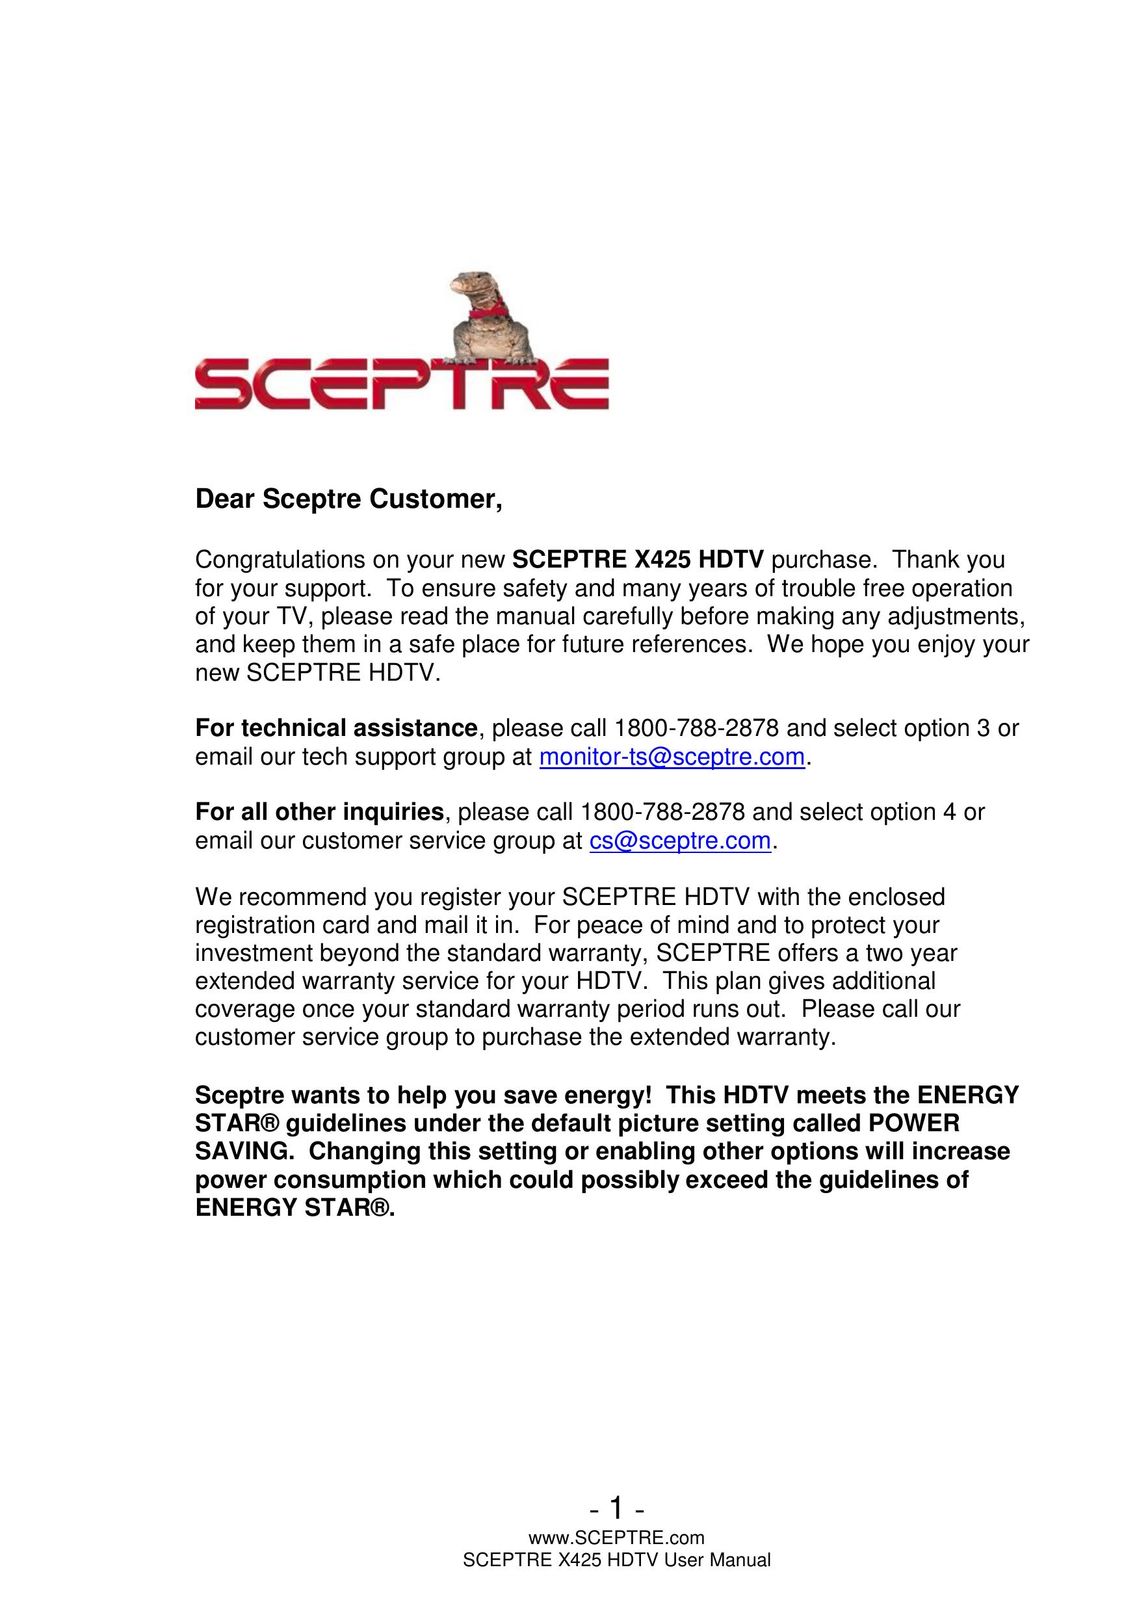 Sceptre Technologies SCEPTRE X425 HDTV Flat Panel Television User Manual